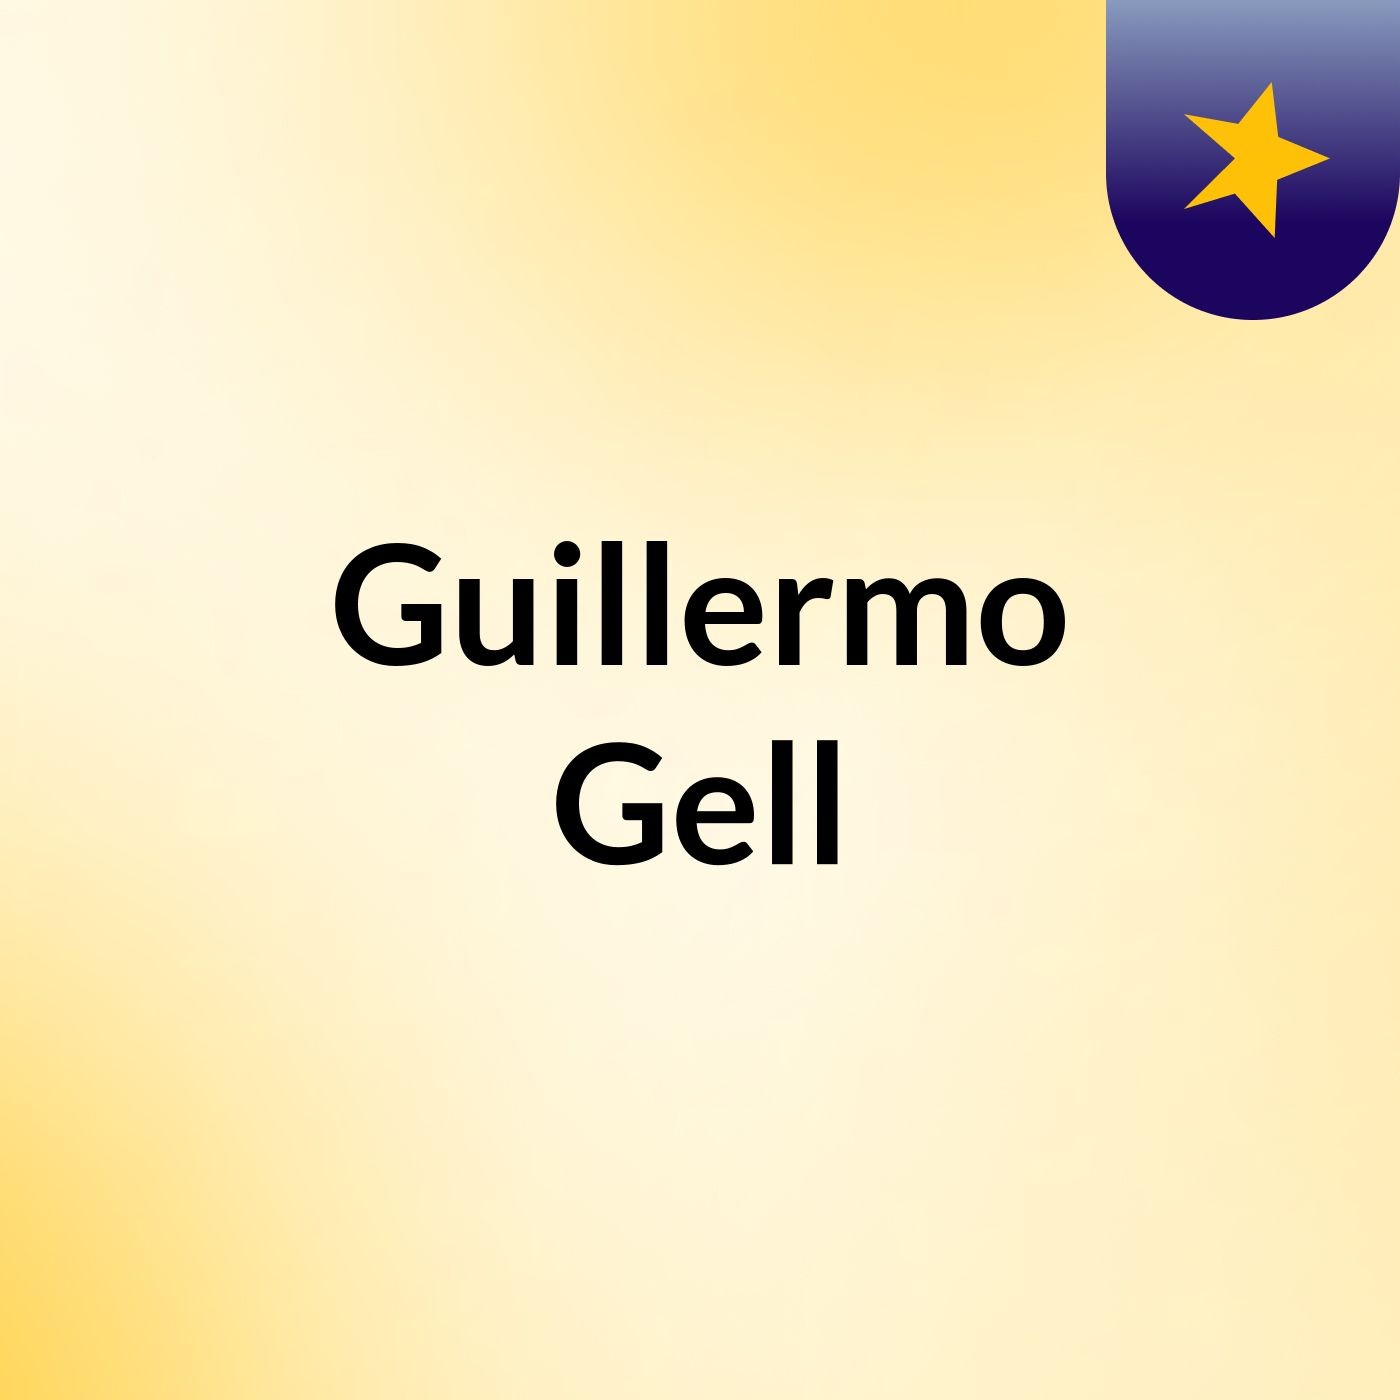 Guillermo Gell